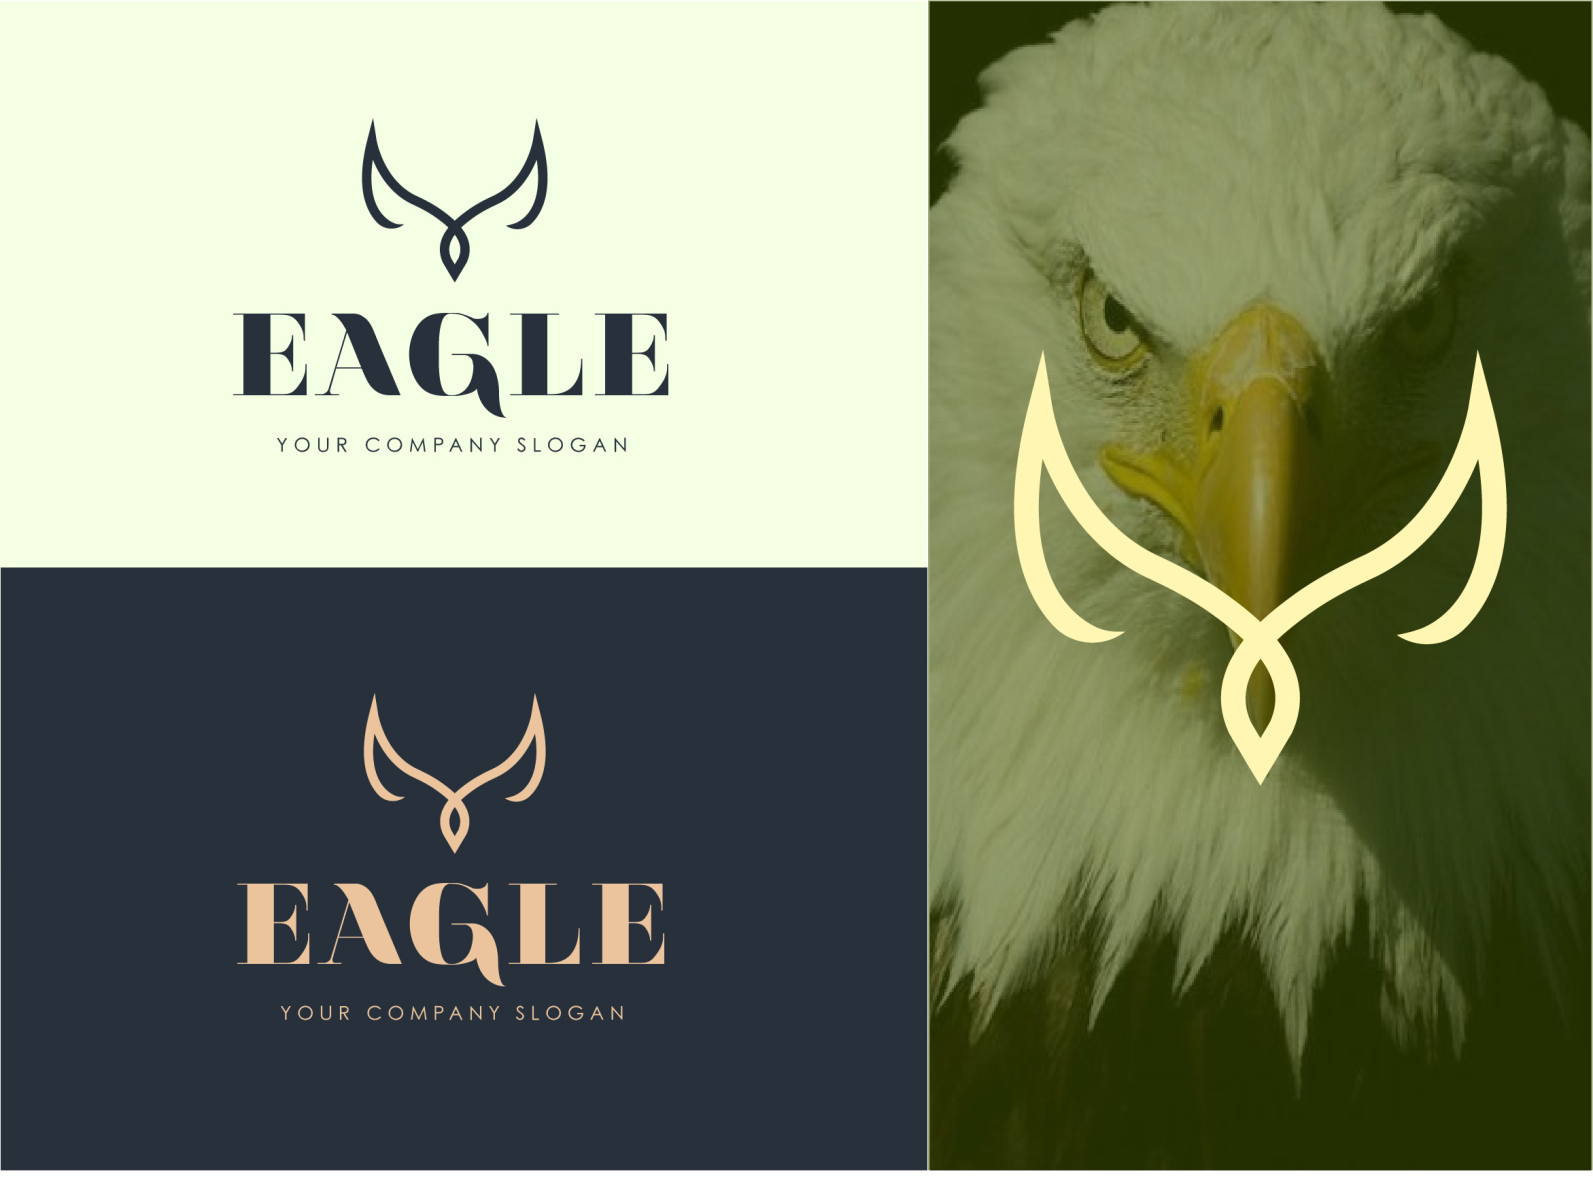 Eagle logo, Vector Logo of Eagle brand free download (eps, ai, png, cdr)  formats